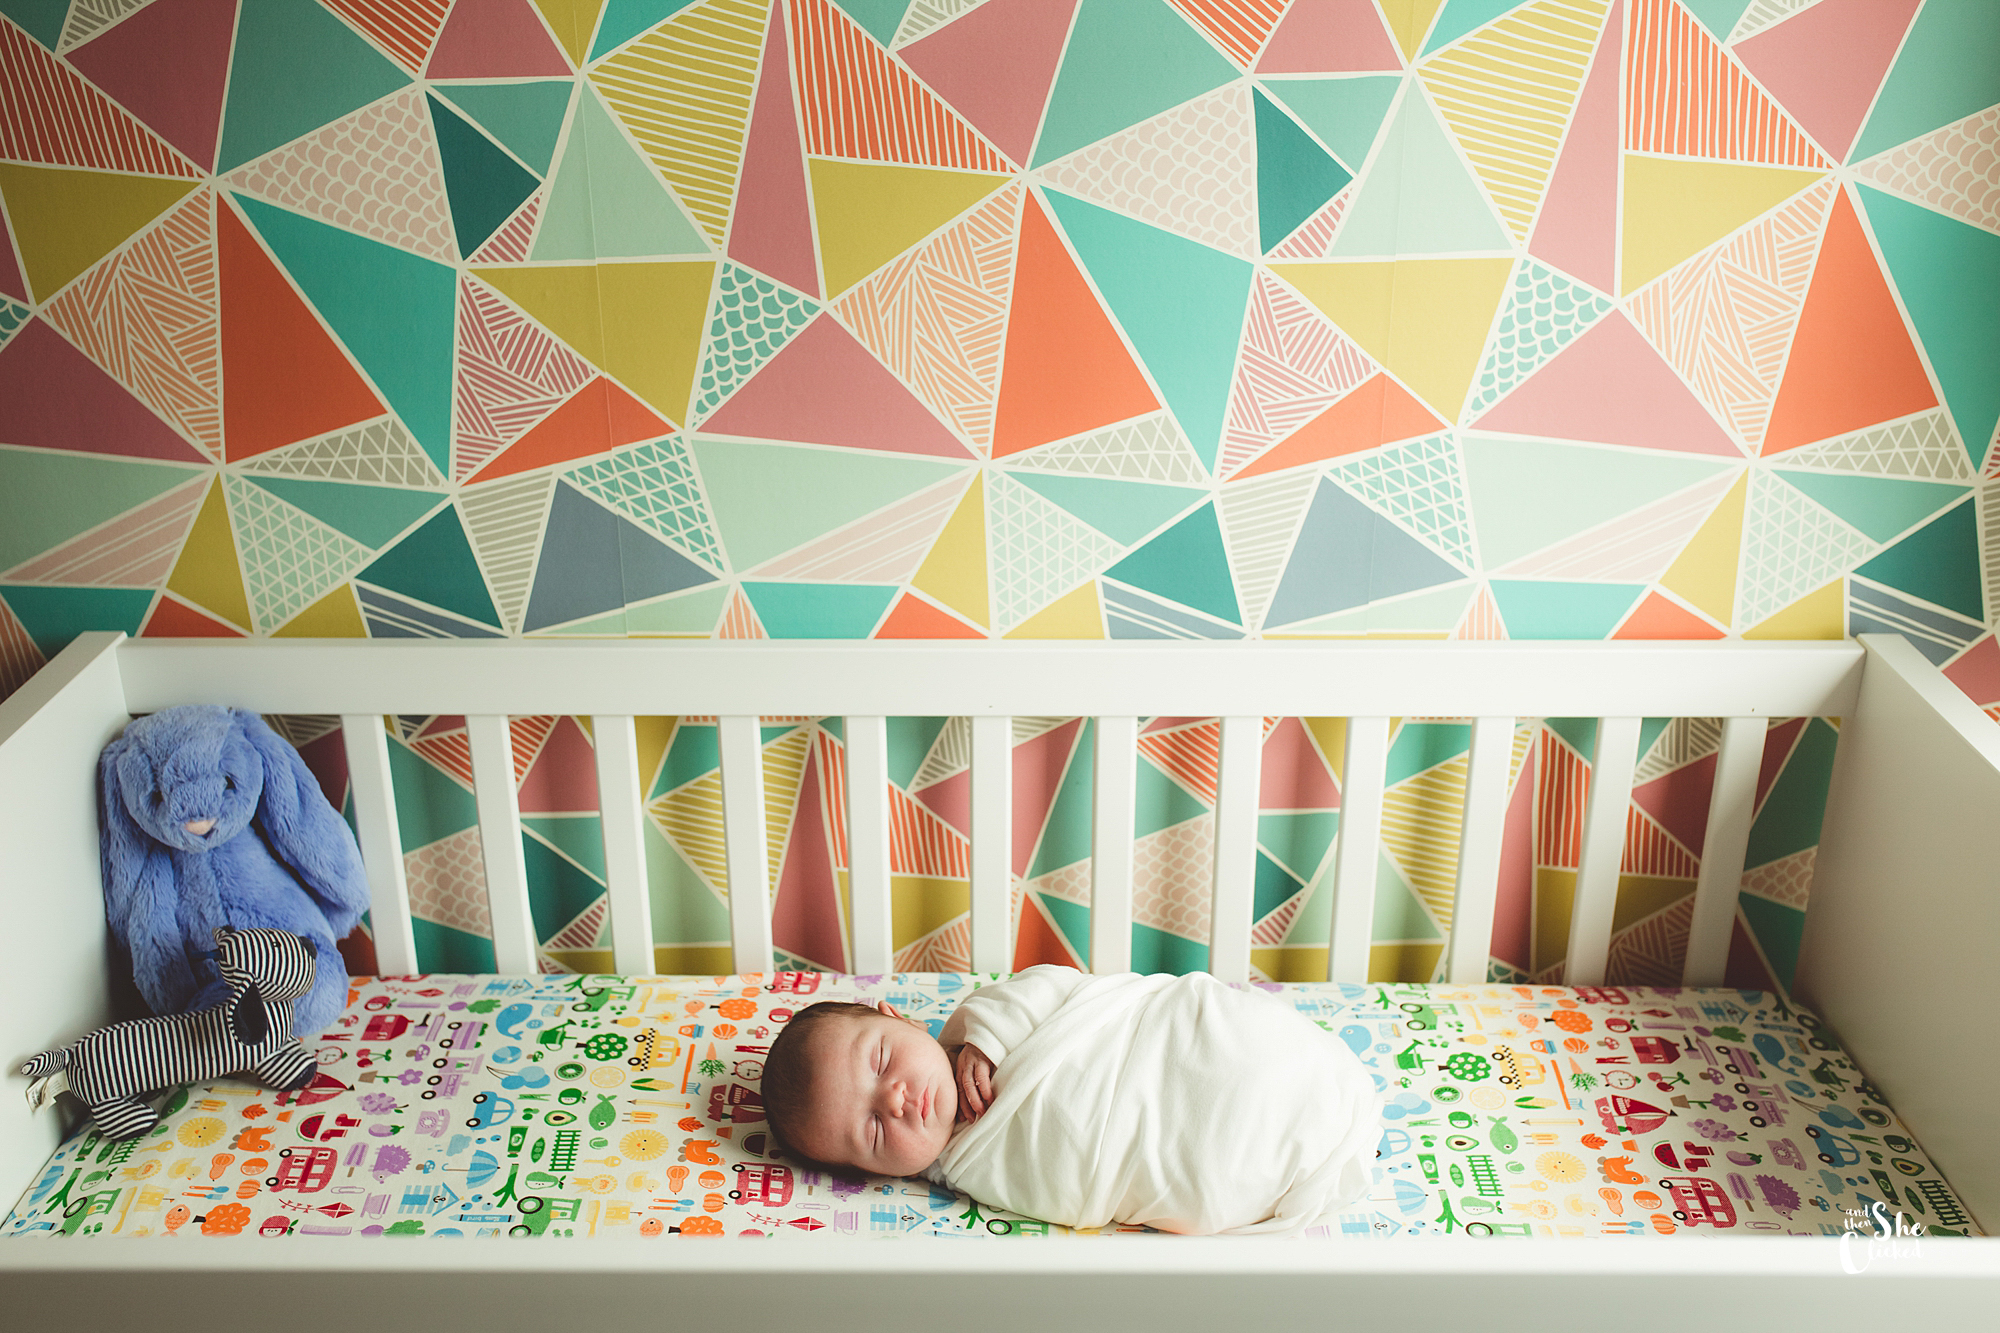 Nursery newborn photoshoot in cot colourful